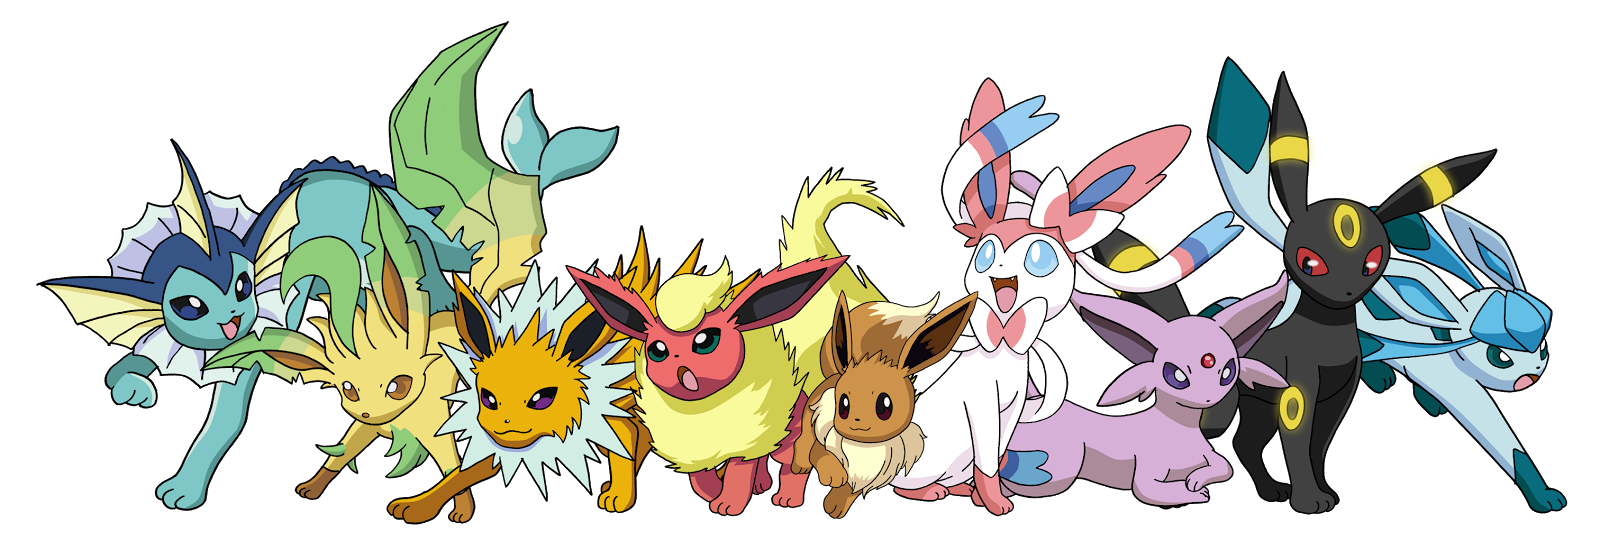 Curiosidades Pokémon: Deino, Zweilous e Hydreigon - Pokémothim